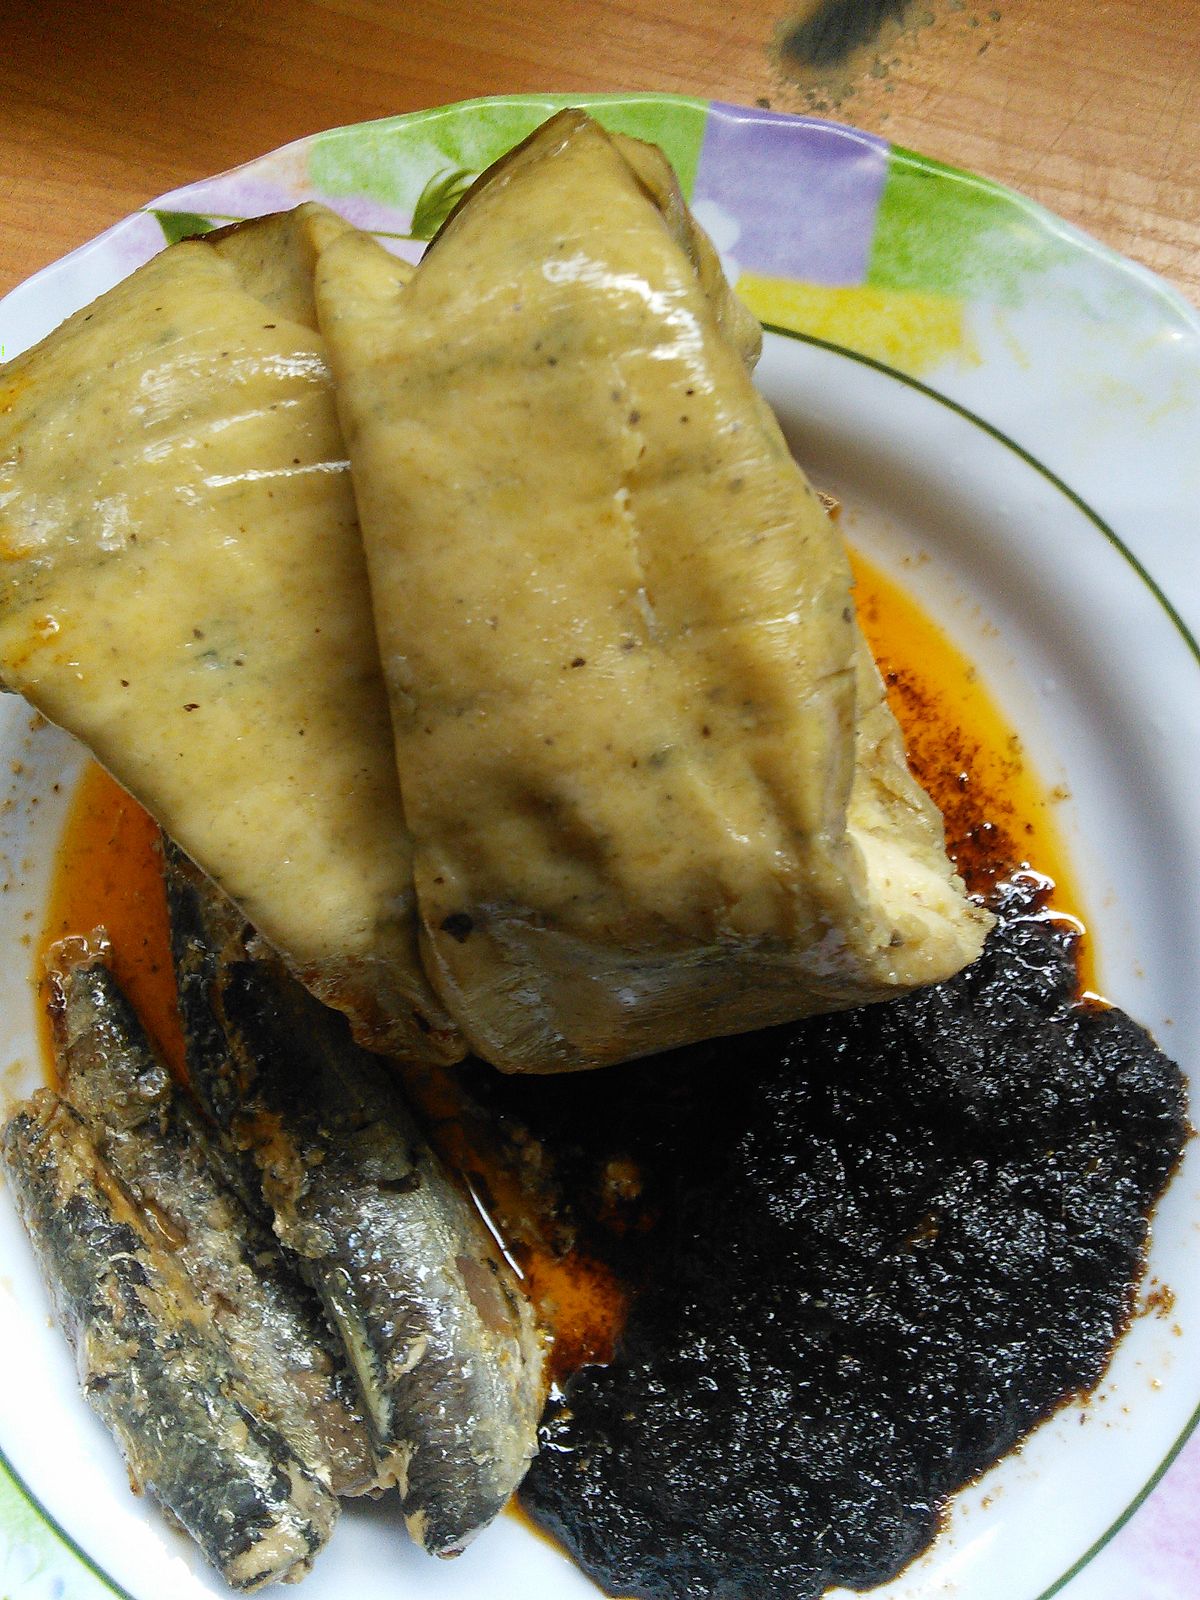 DIY Recipes: How to prepare shito (Ghanaian pepper sauce)